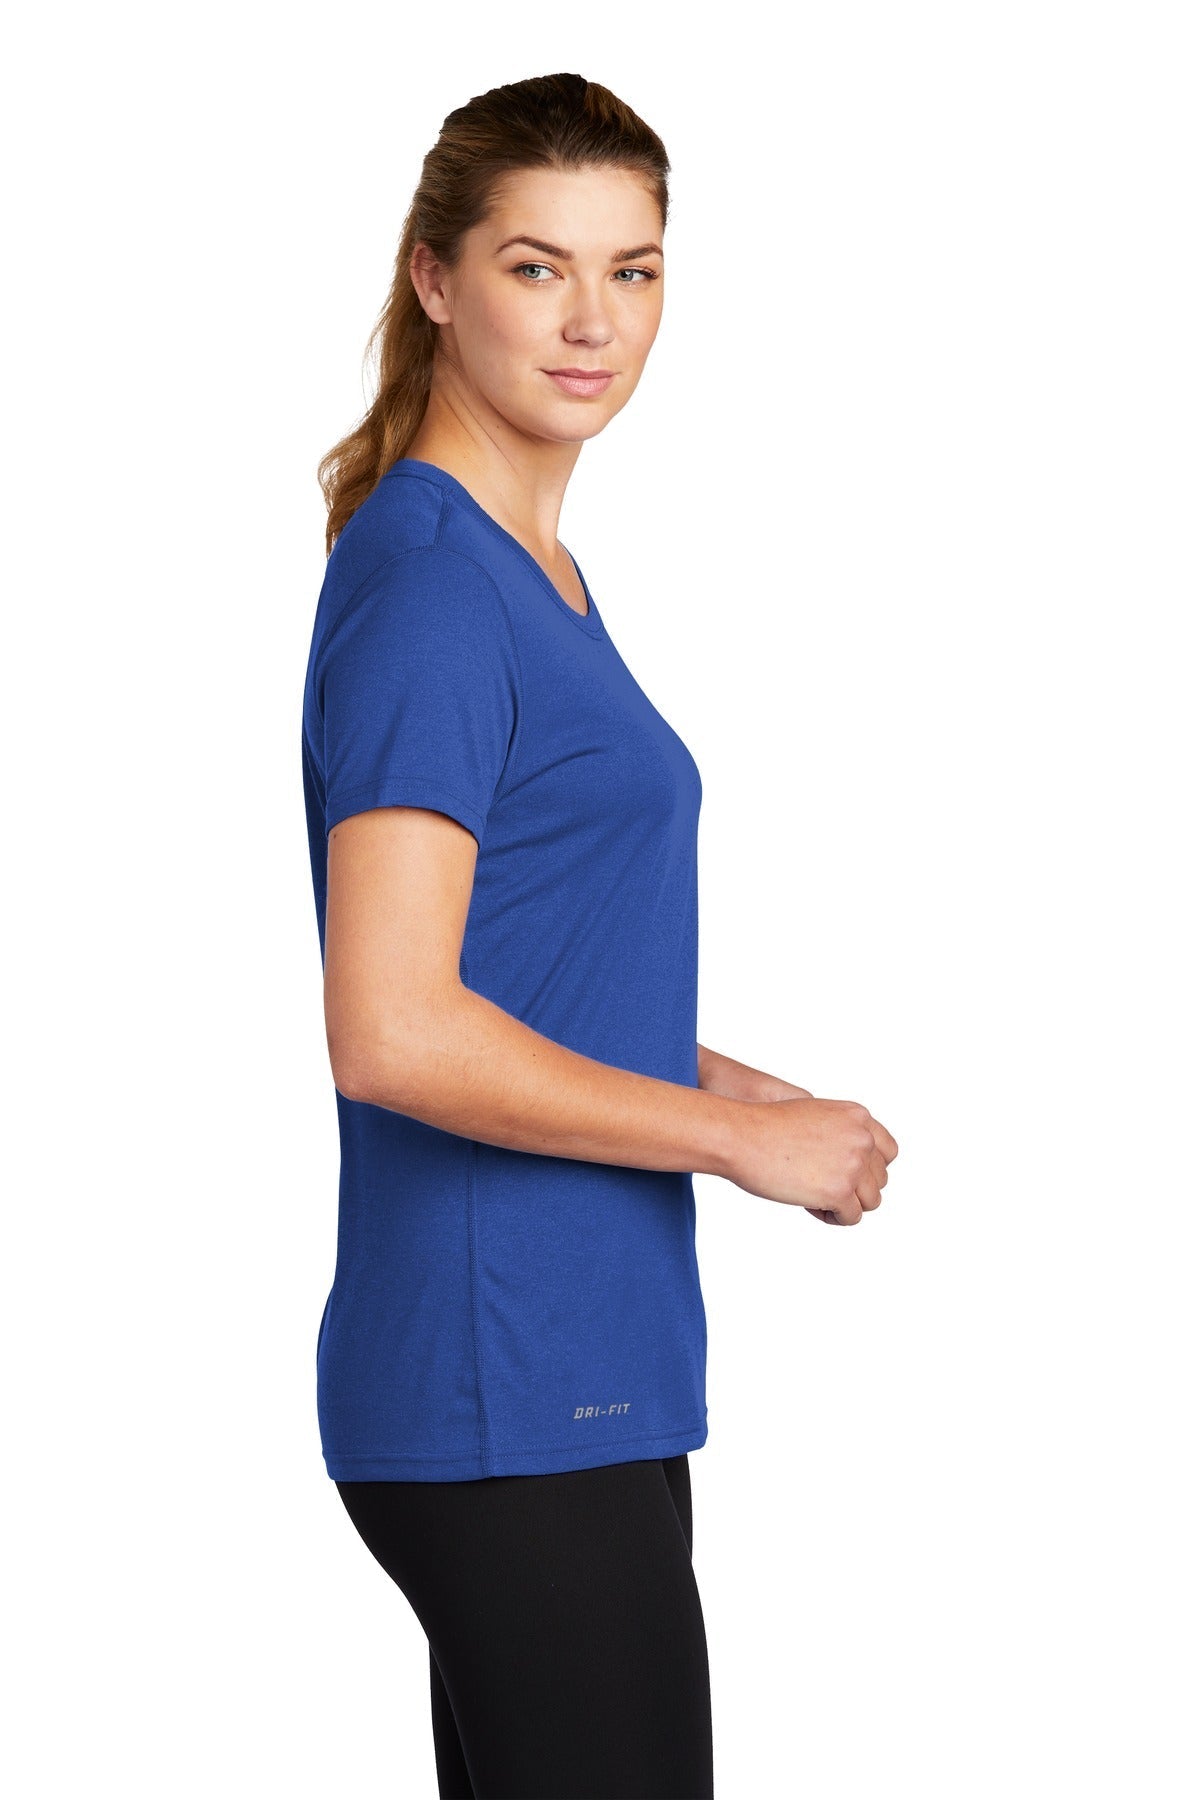 Nike Ladies Legend Tee CU7599 - BT Imprintables Shirts